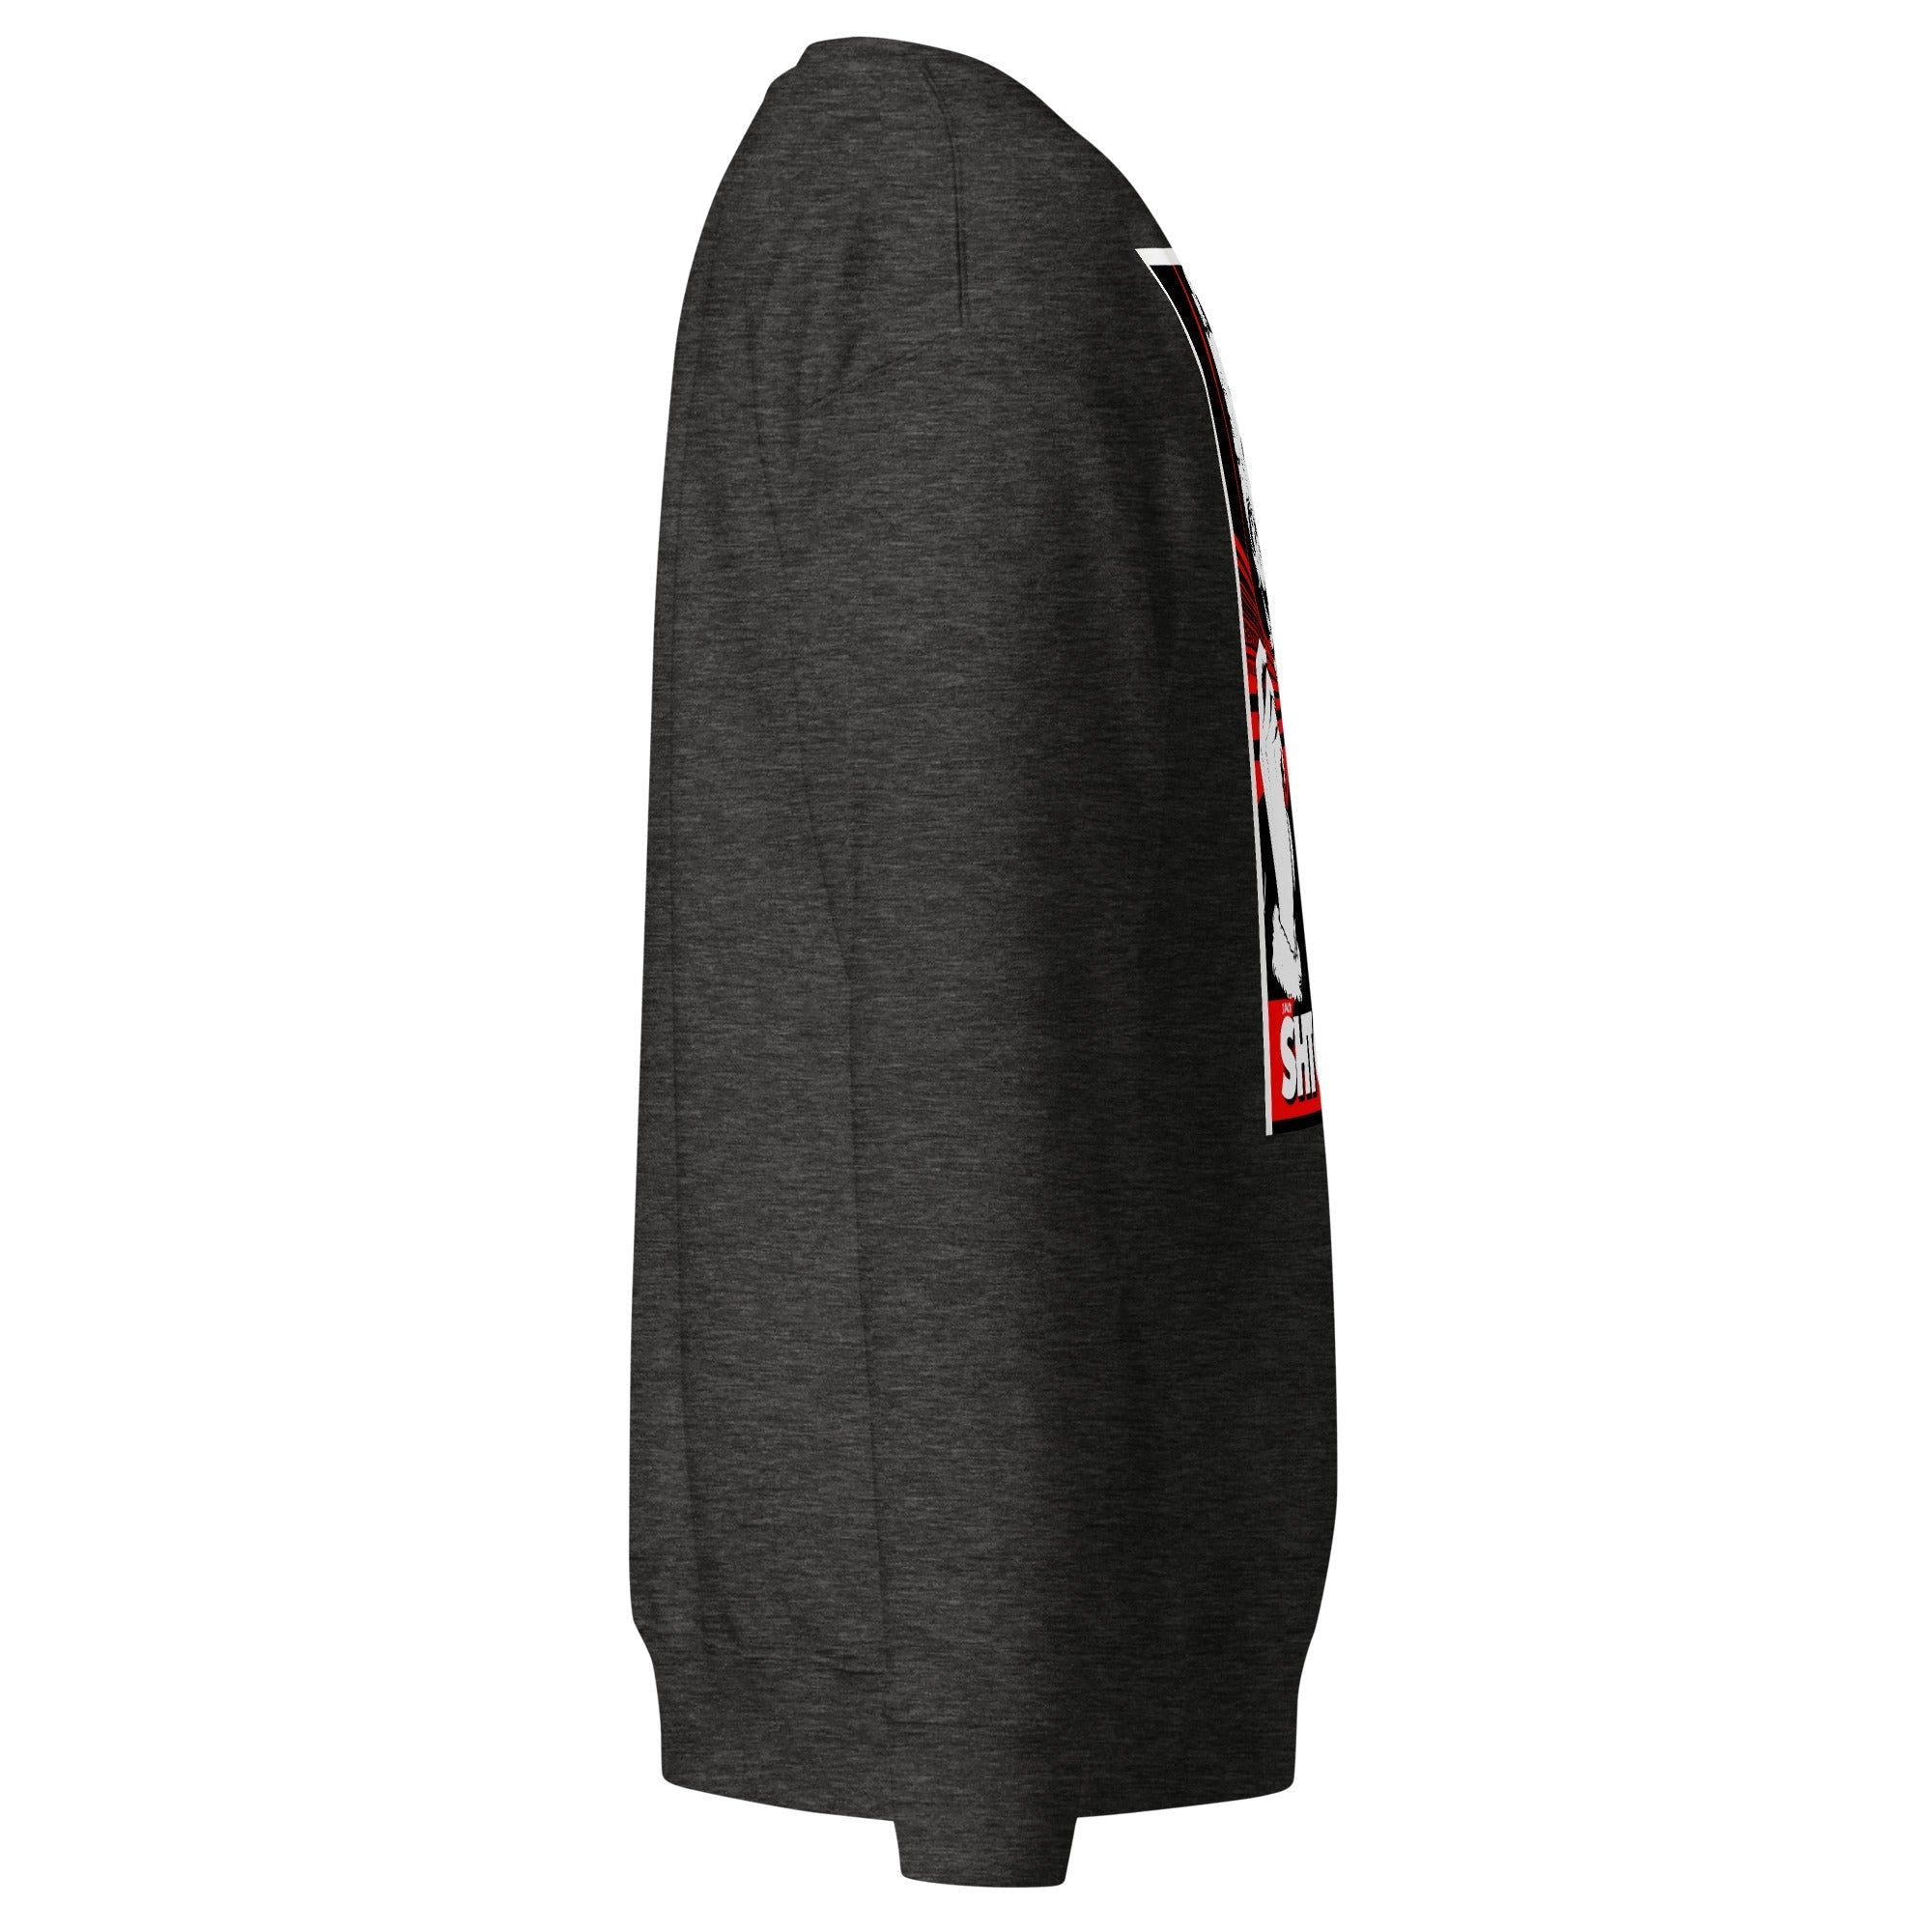 Unisex Premium Sweatshirt - Swedish Superstar Series v.18 - GRAPHIC T-SHIRTS